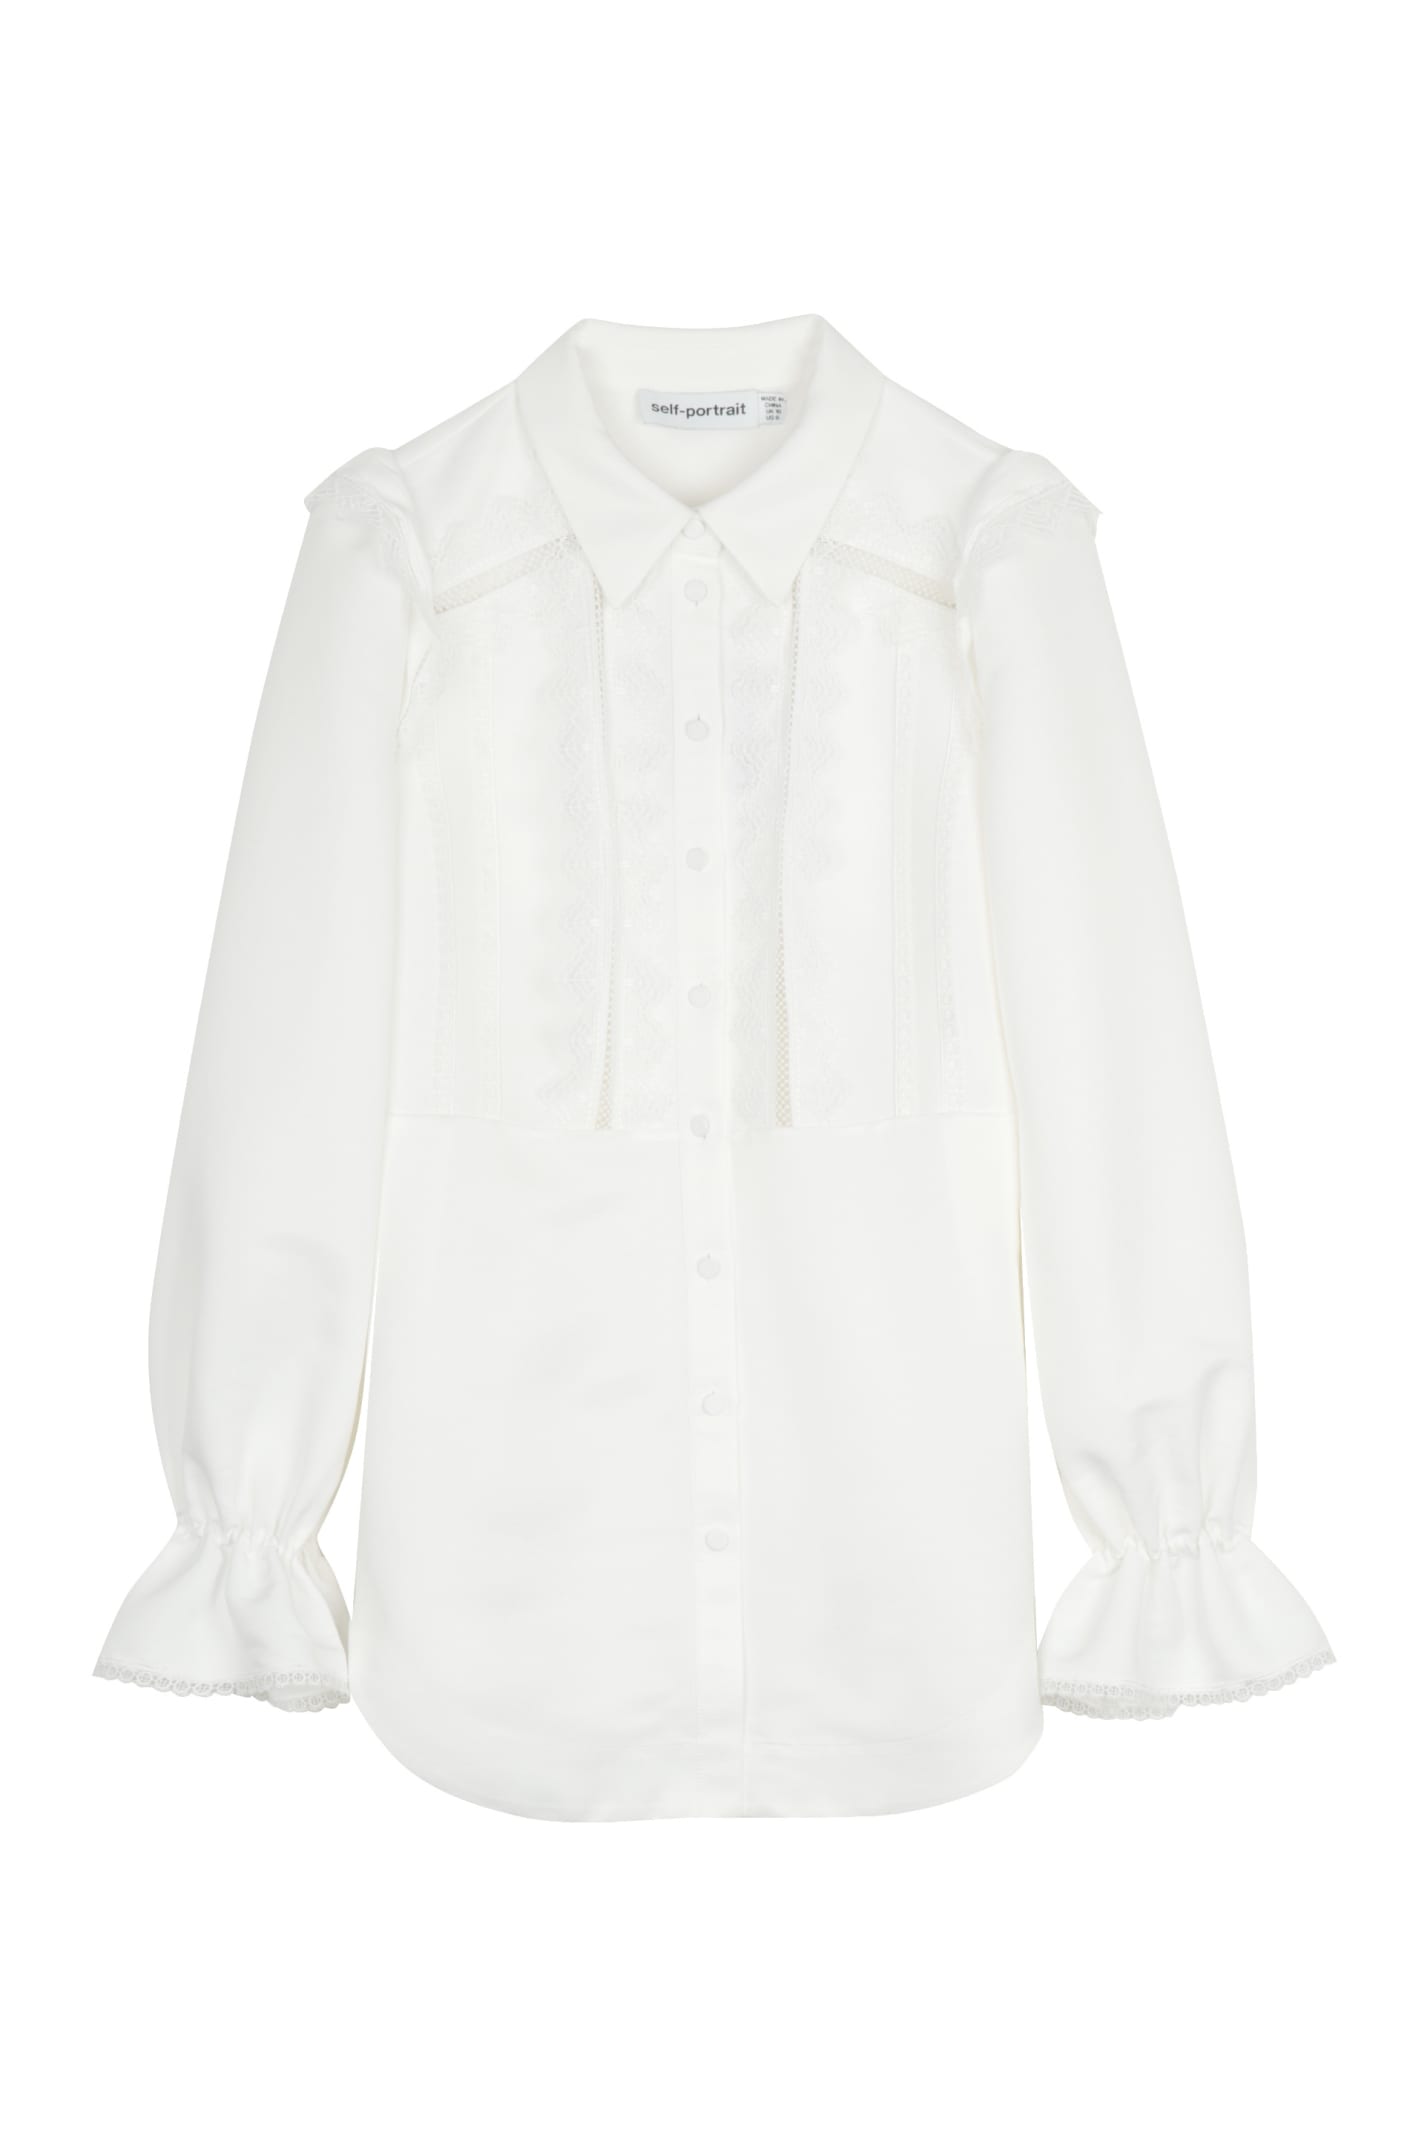 Self-portrait Lace Trim Shirt In White